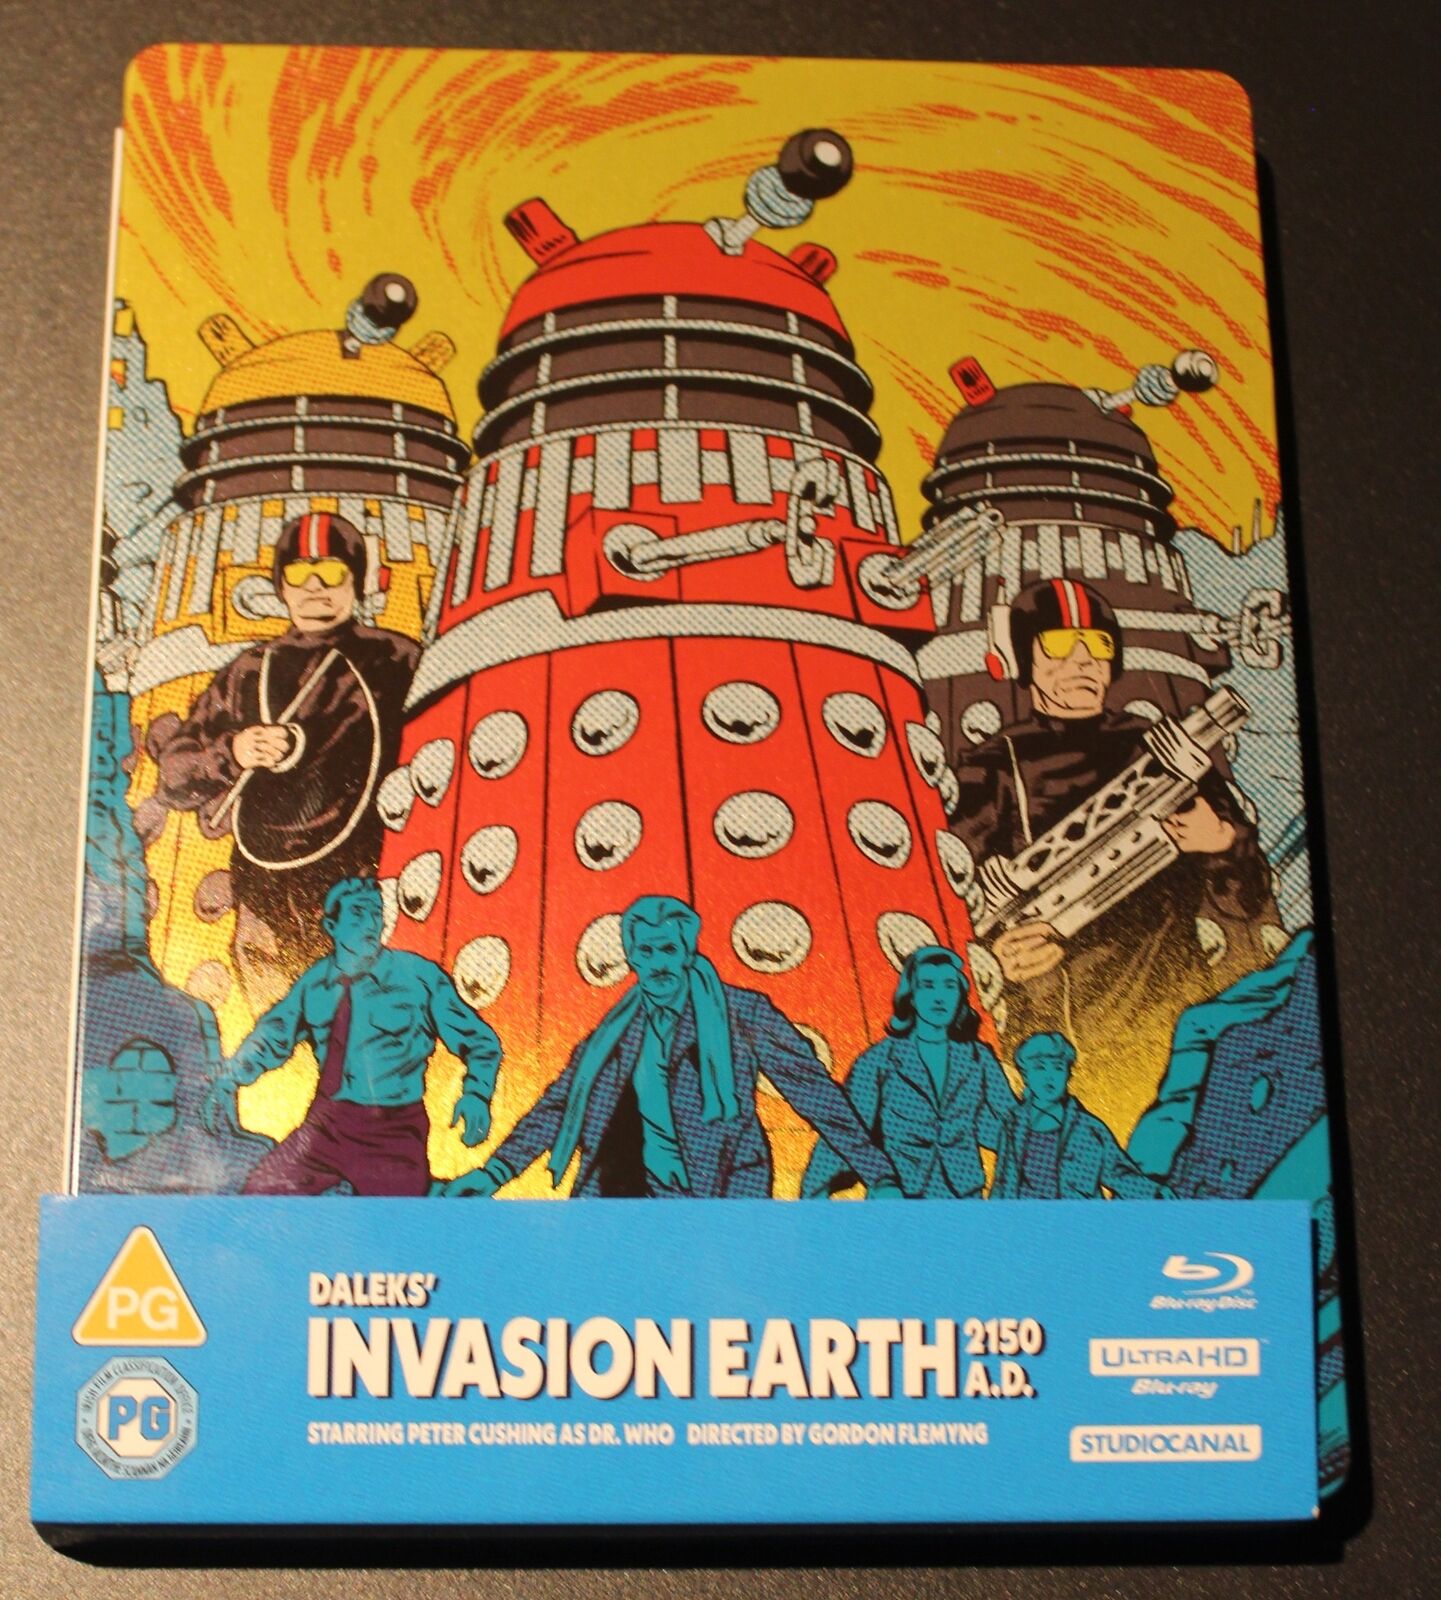 Steelbook - Region 2 - Studio Canal - Daleks\' Invasion of Earth 2150AD - UHD/BLU